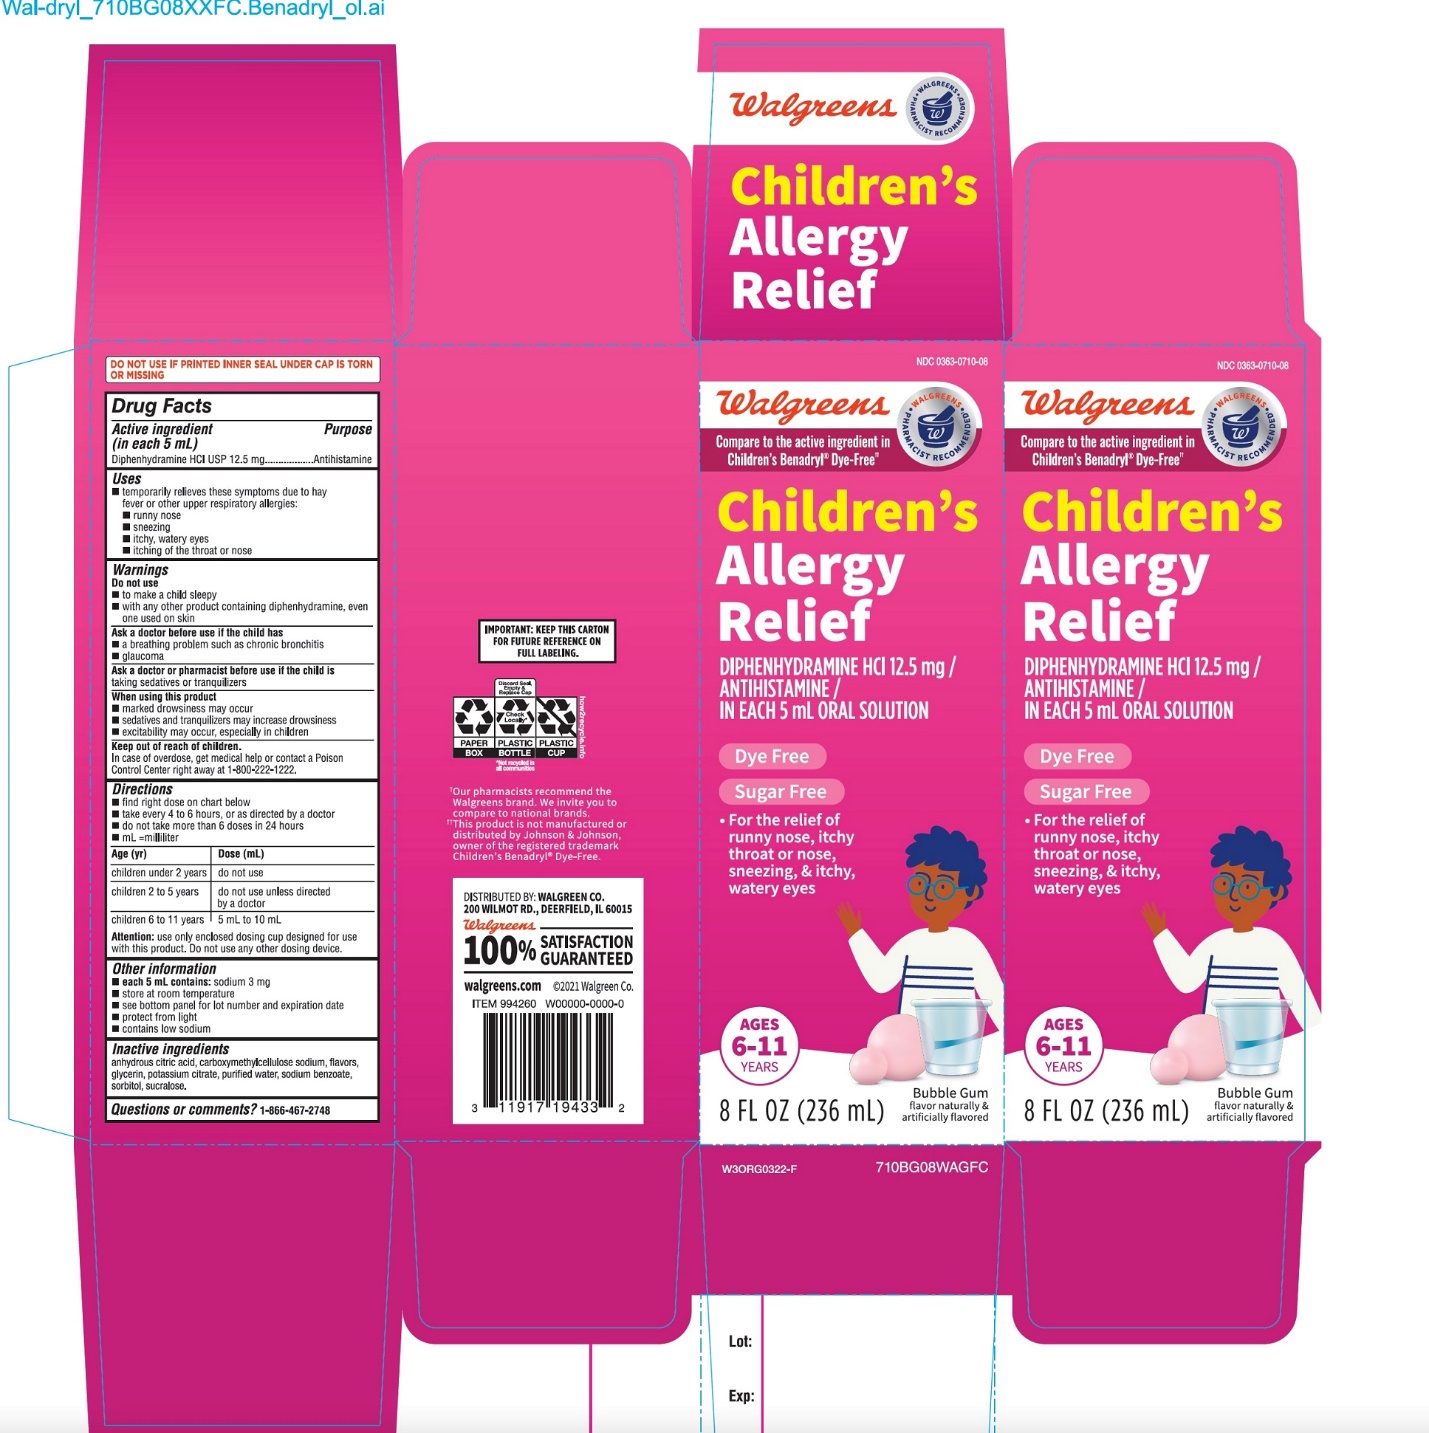 Children's Allergy Dye- Free Wal - Dryl  BUBBLE GUM FLAVOR 8 FL OZ (236 mL)